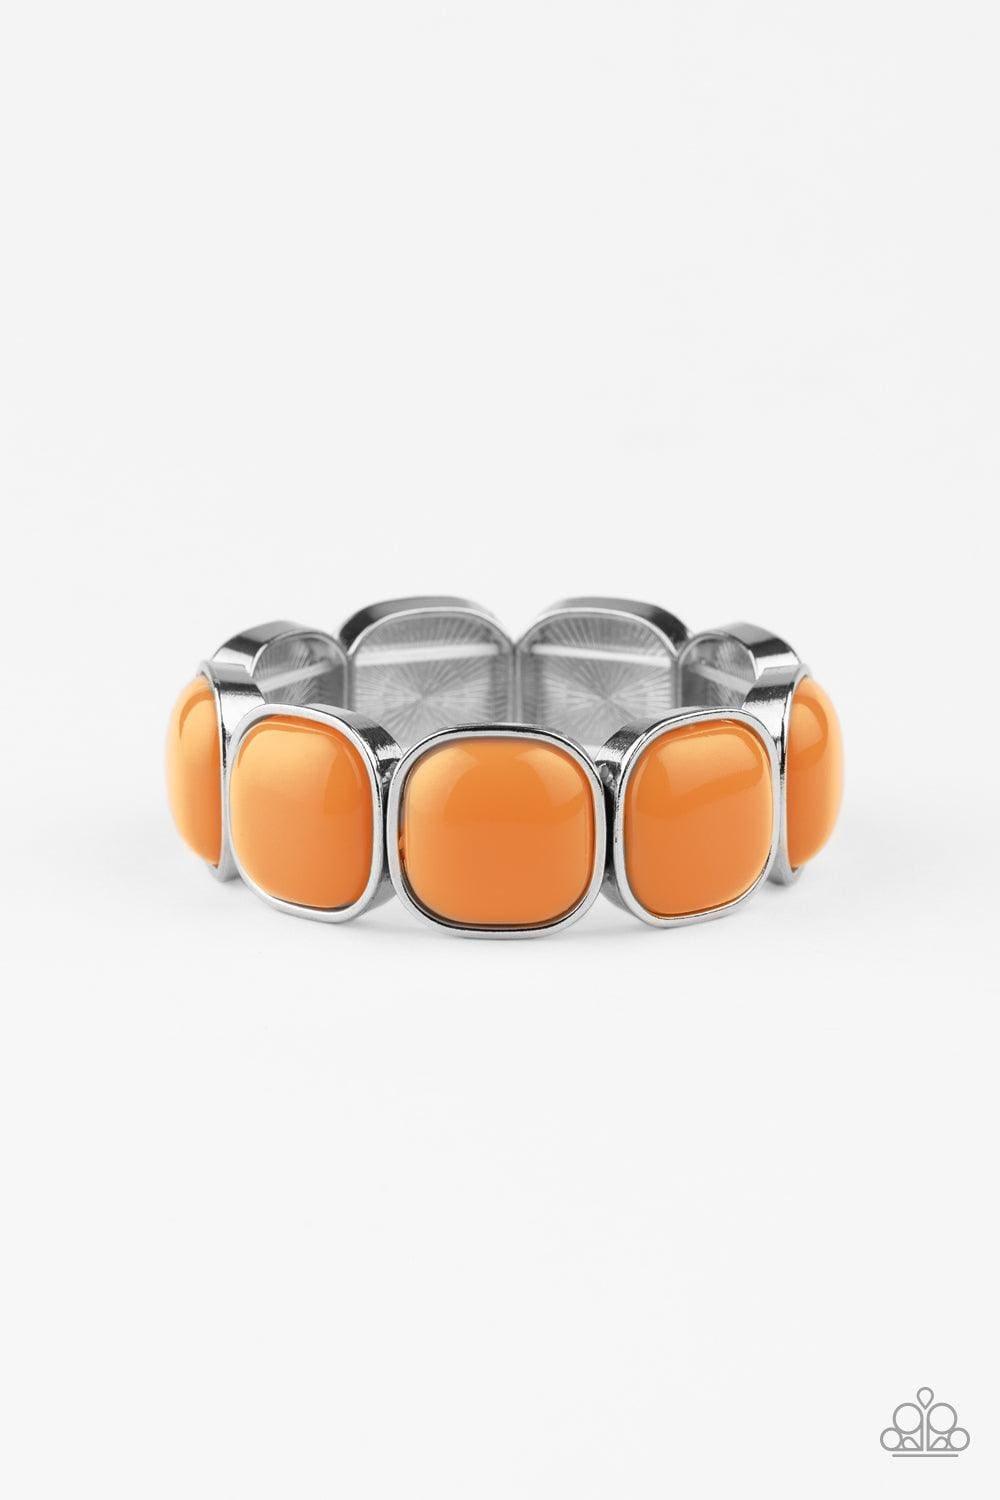 Paparazzi Accessories - Vivacious Volume - Orange Bracelet - Bling by JessieK